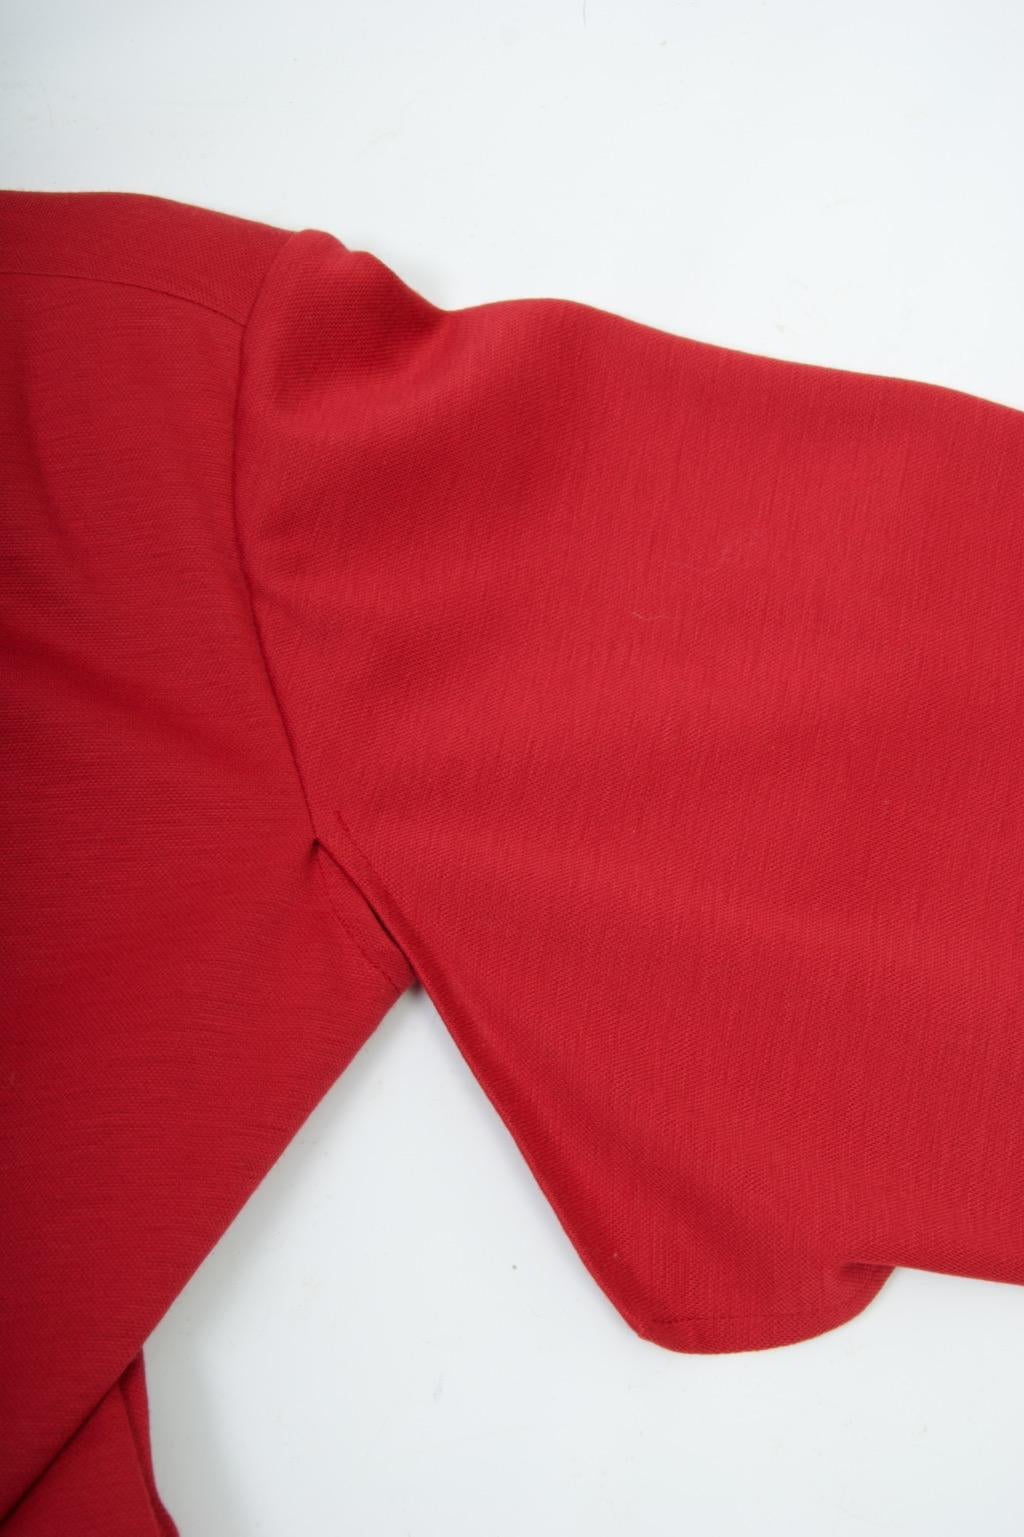 Sonia Rykiel Red Knit Coat/Dress For Sale 3